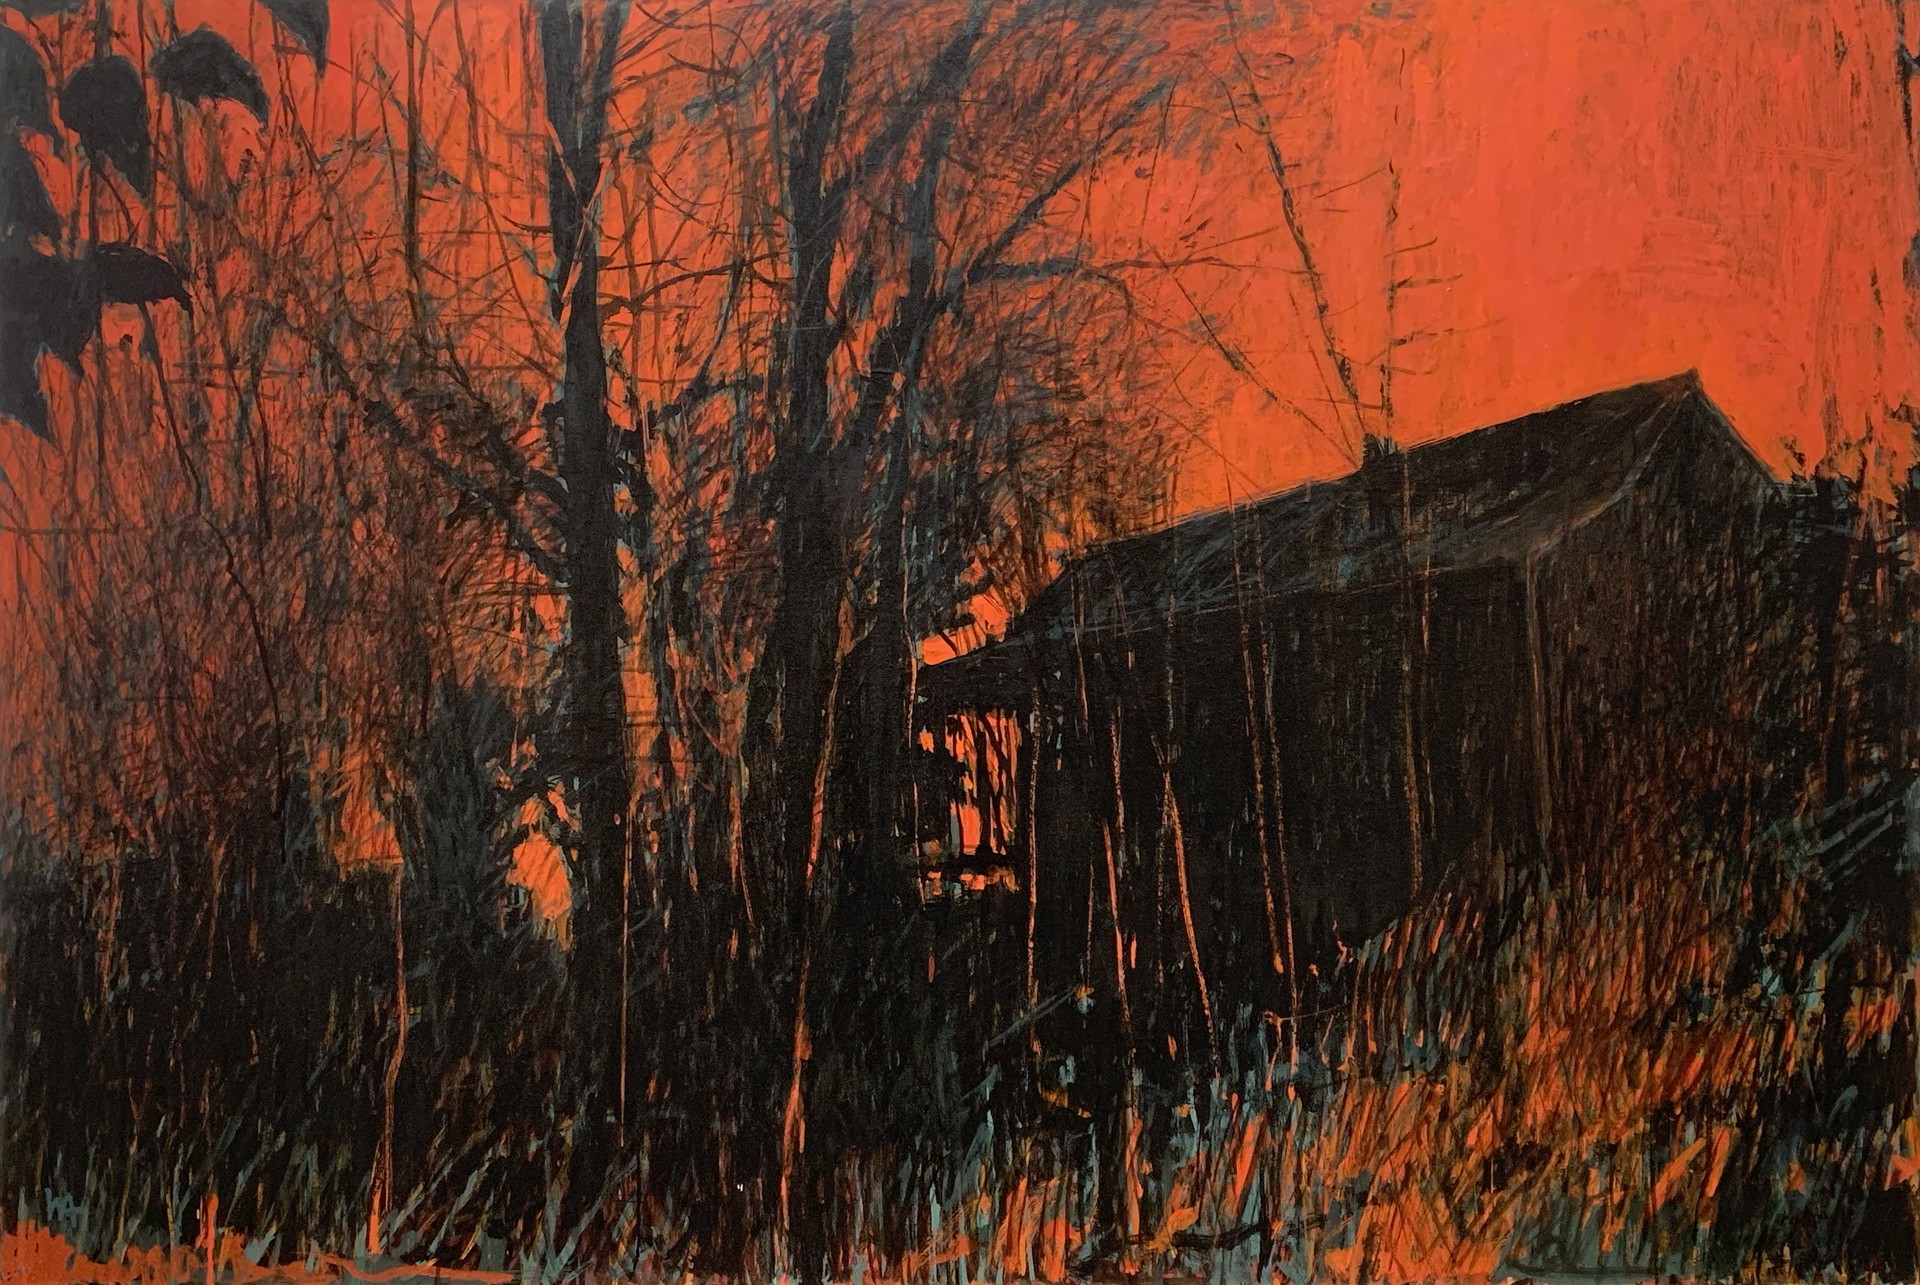 Barn by William Anzalone